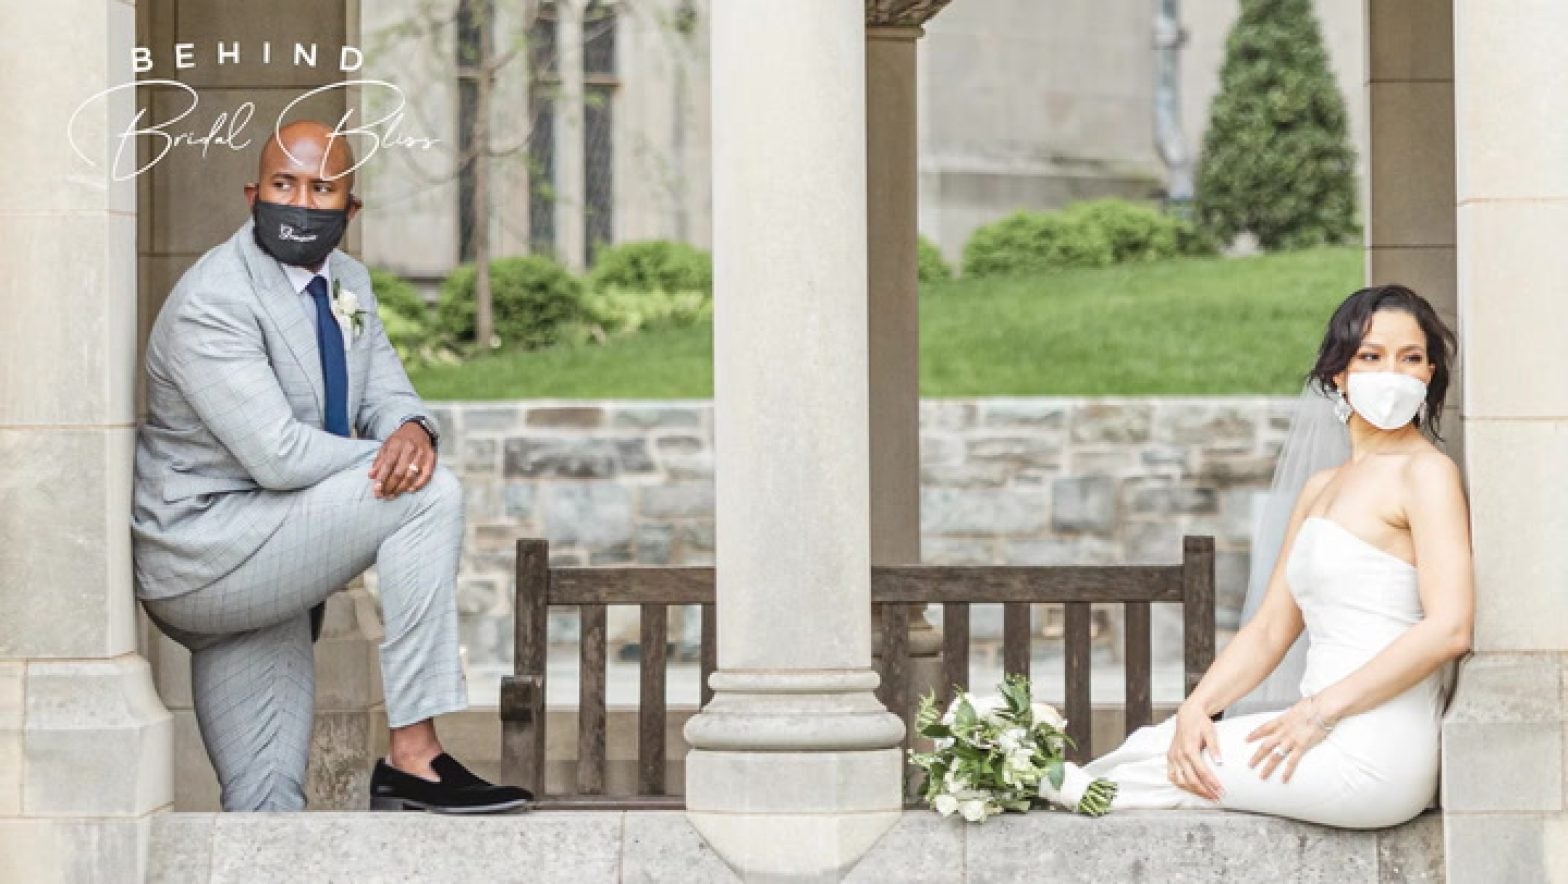 Behind Bridal Bliss: Lauren and Warren’s Socially Distanced Wedding Made Love The Star